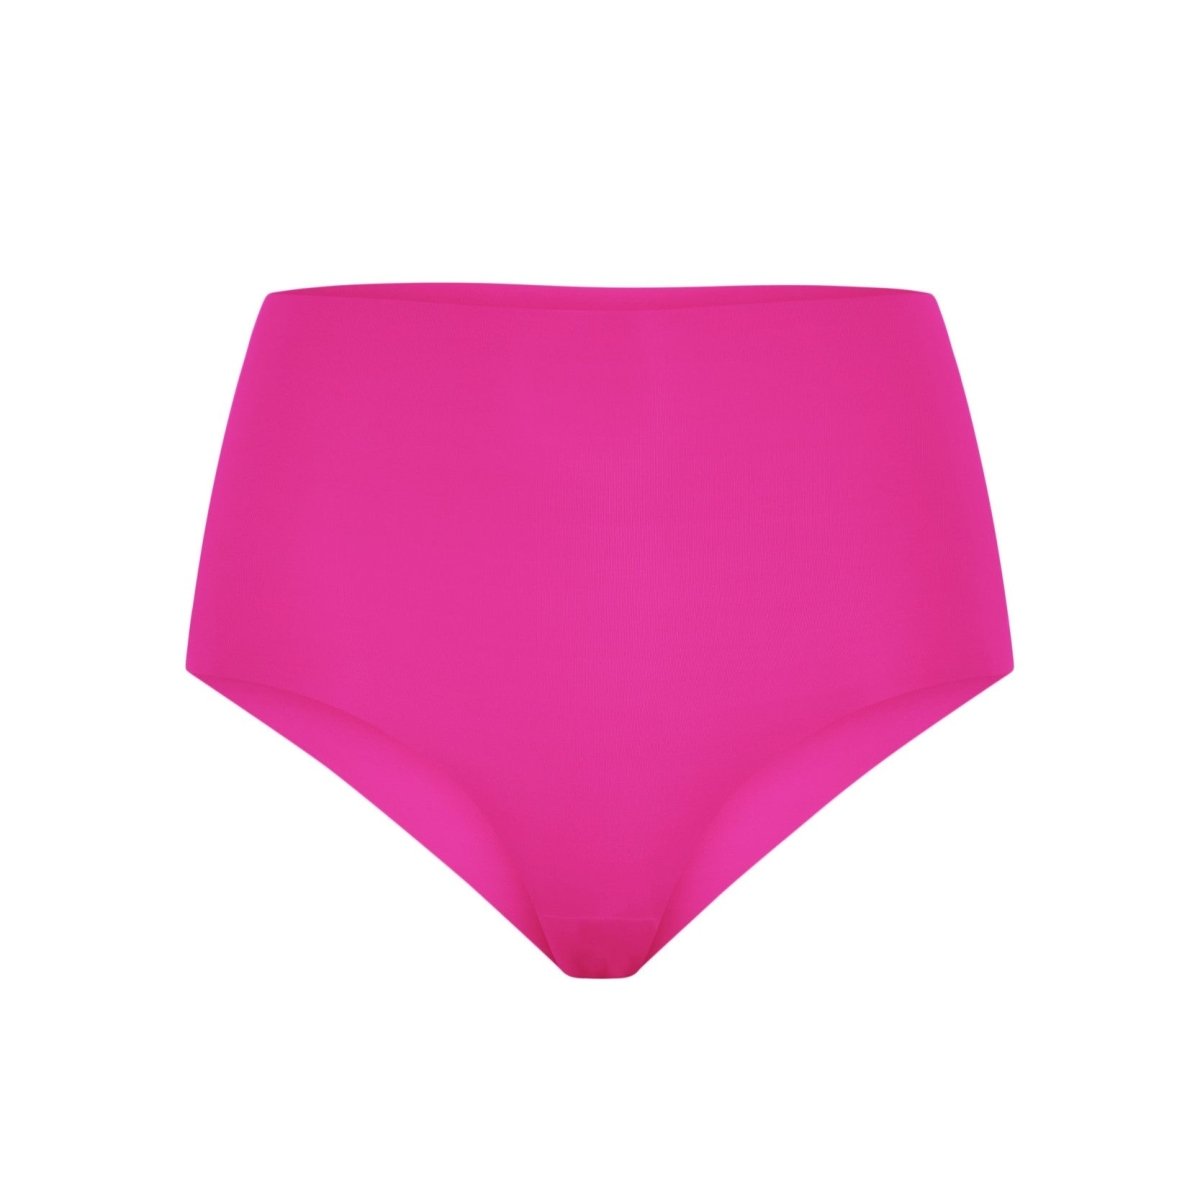 High-Rise Cheeky - Seamless Ultrasmooth - Pink Fizz - Peach Underwear